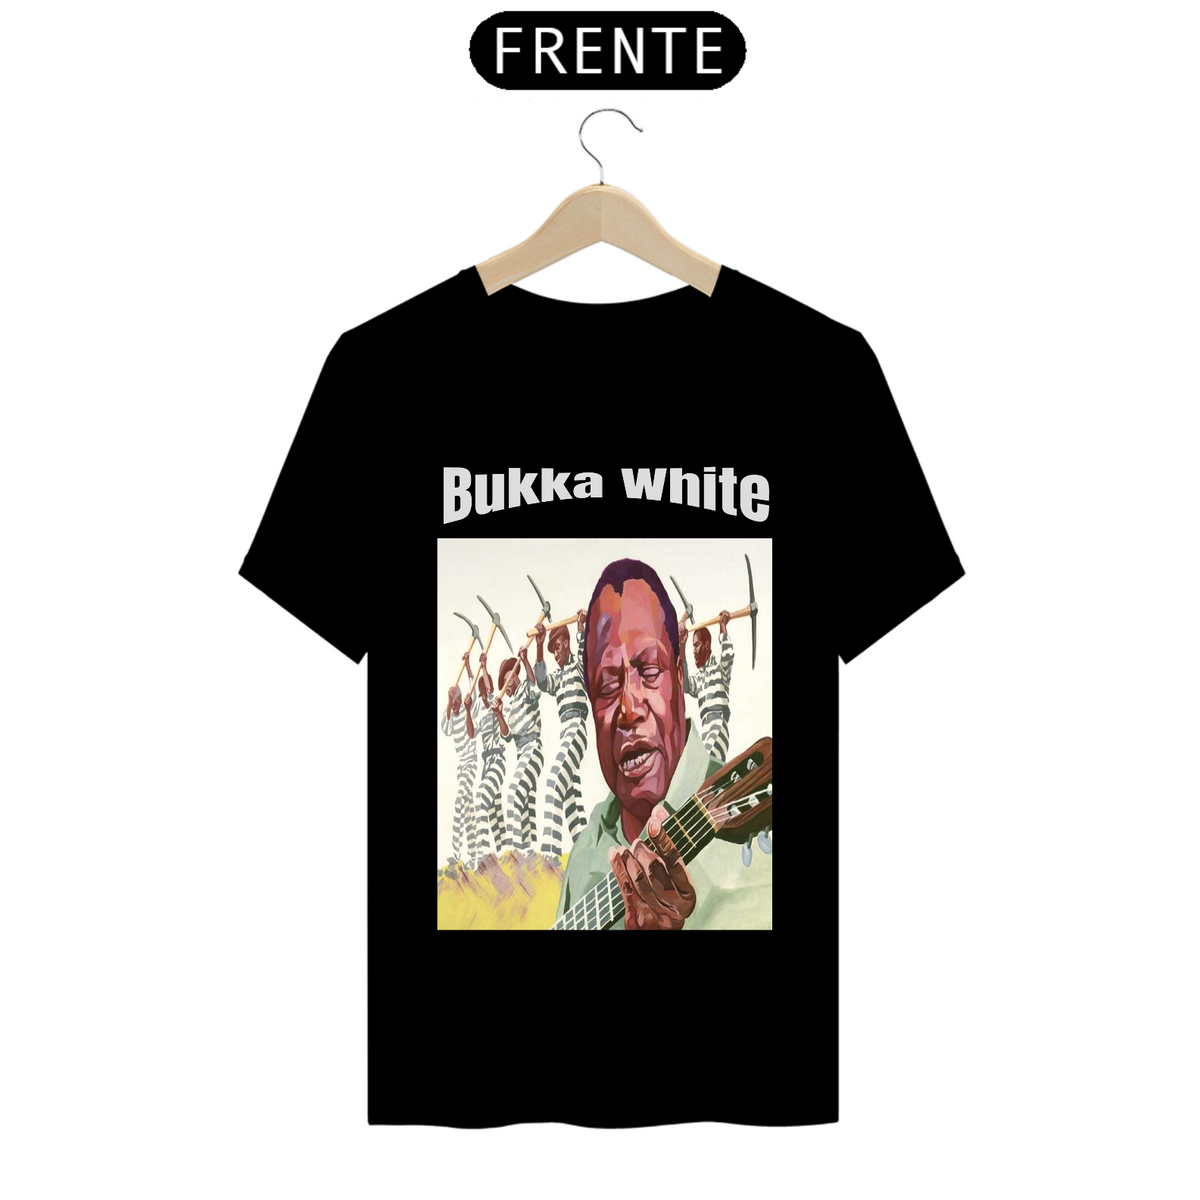 Nome do produto: Bukka White